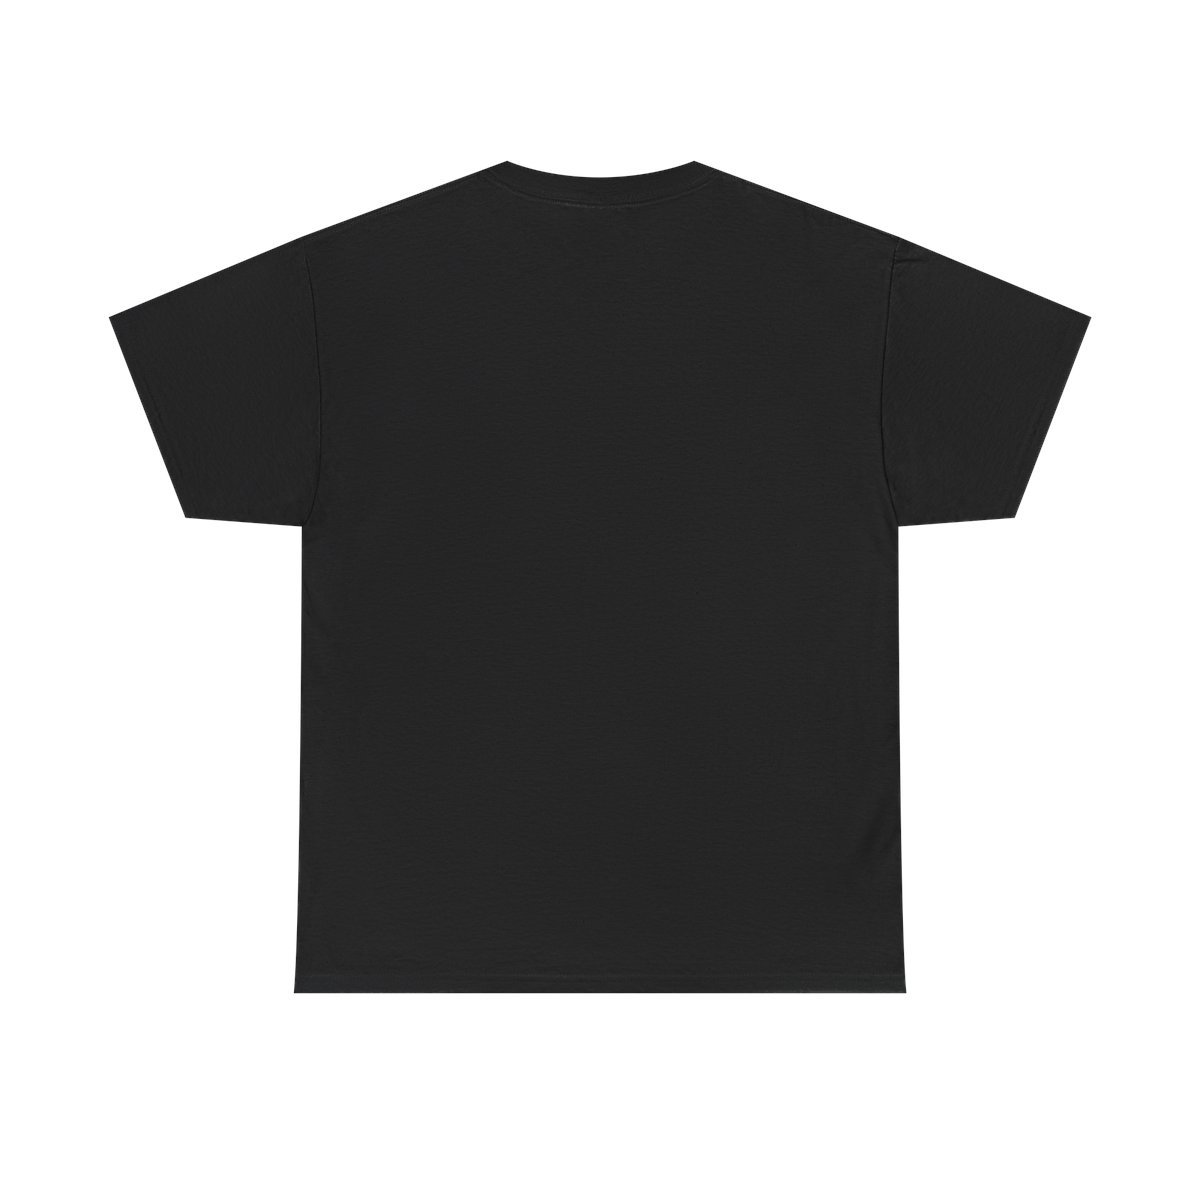 Elgibbor – Jubilieum Short Sleeve Tshirt